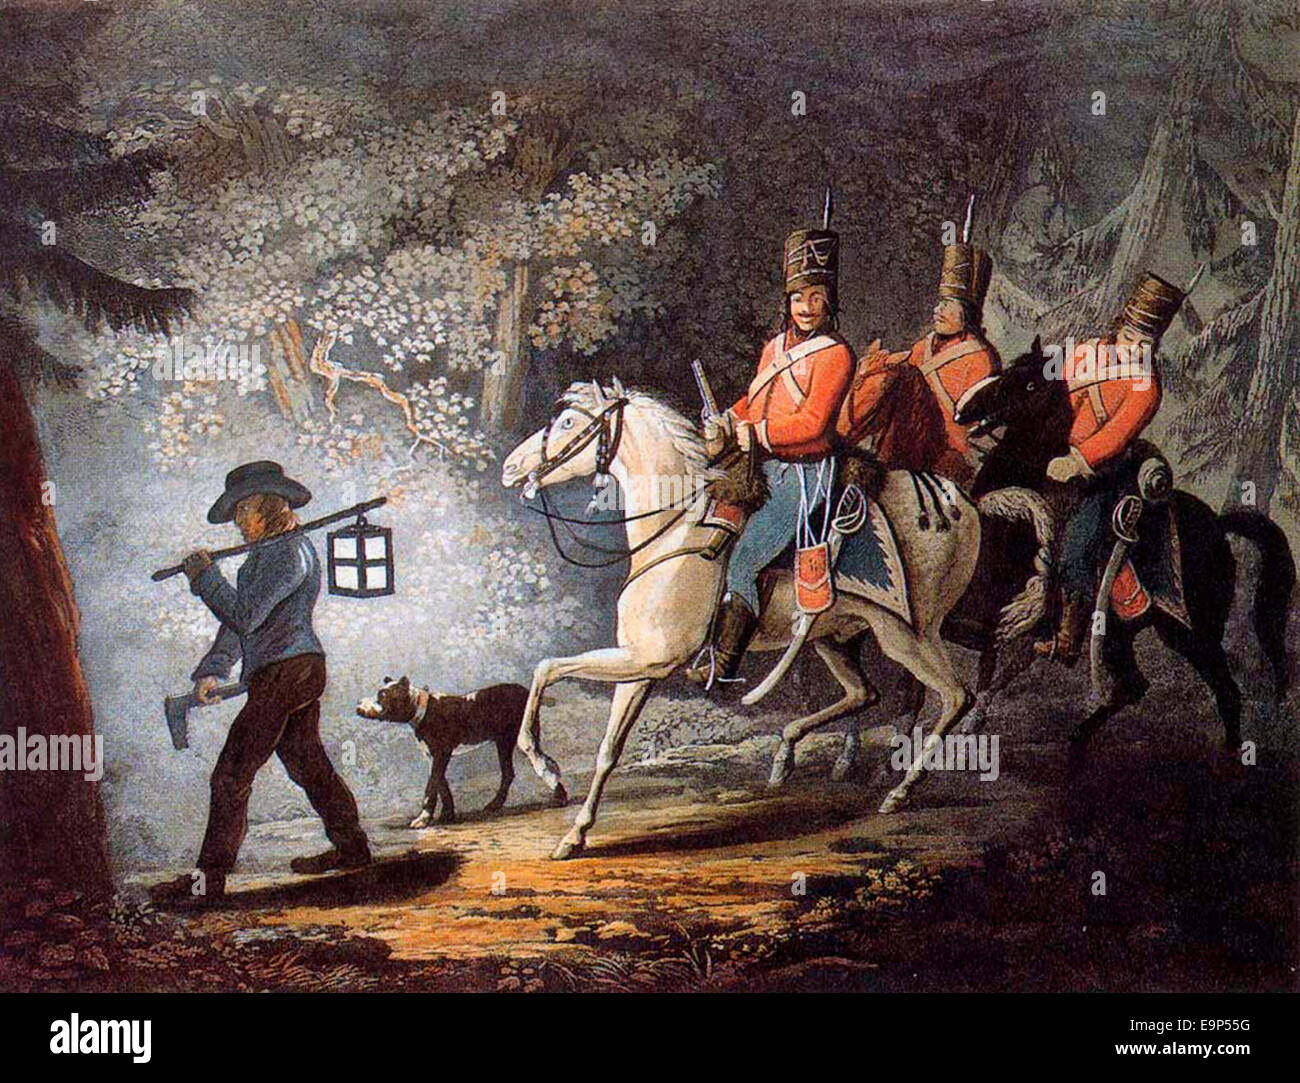 Hessian cavalry in the American Revolutionary War. Stock Photo